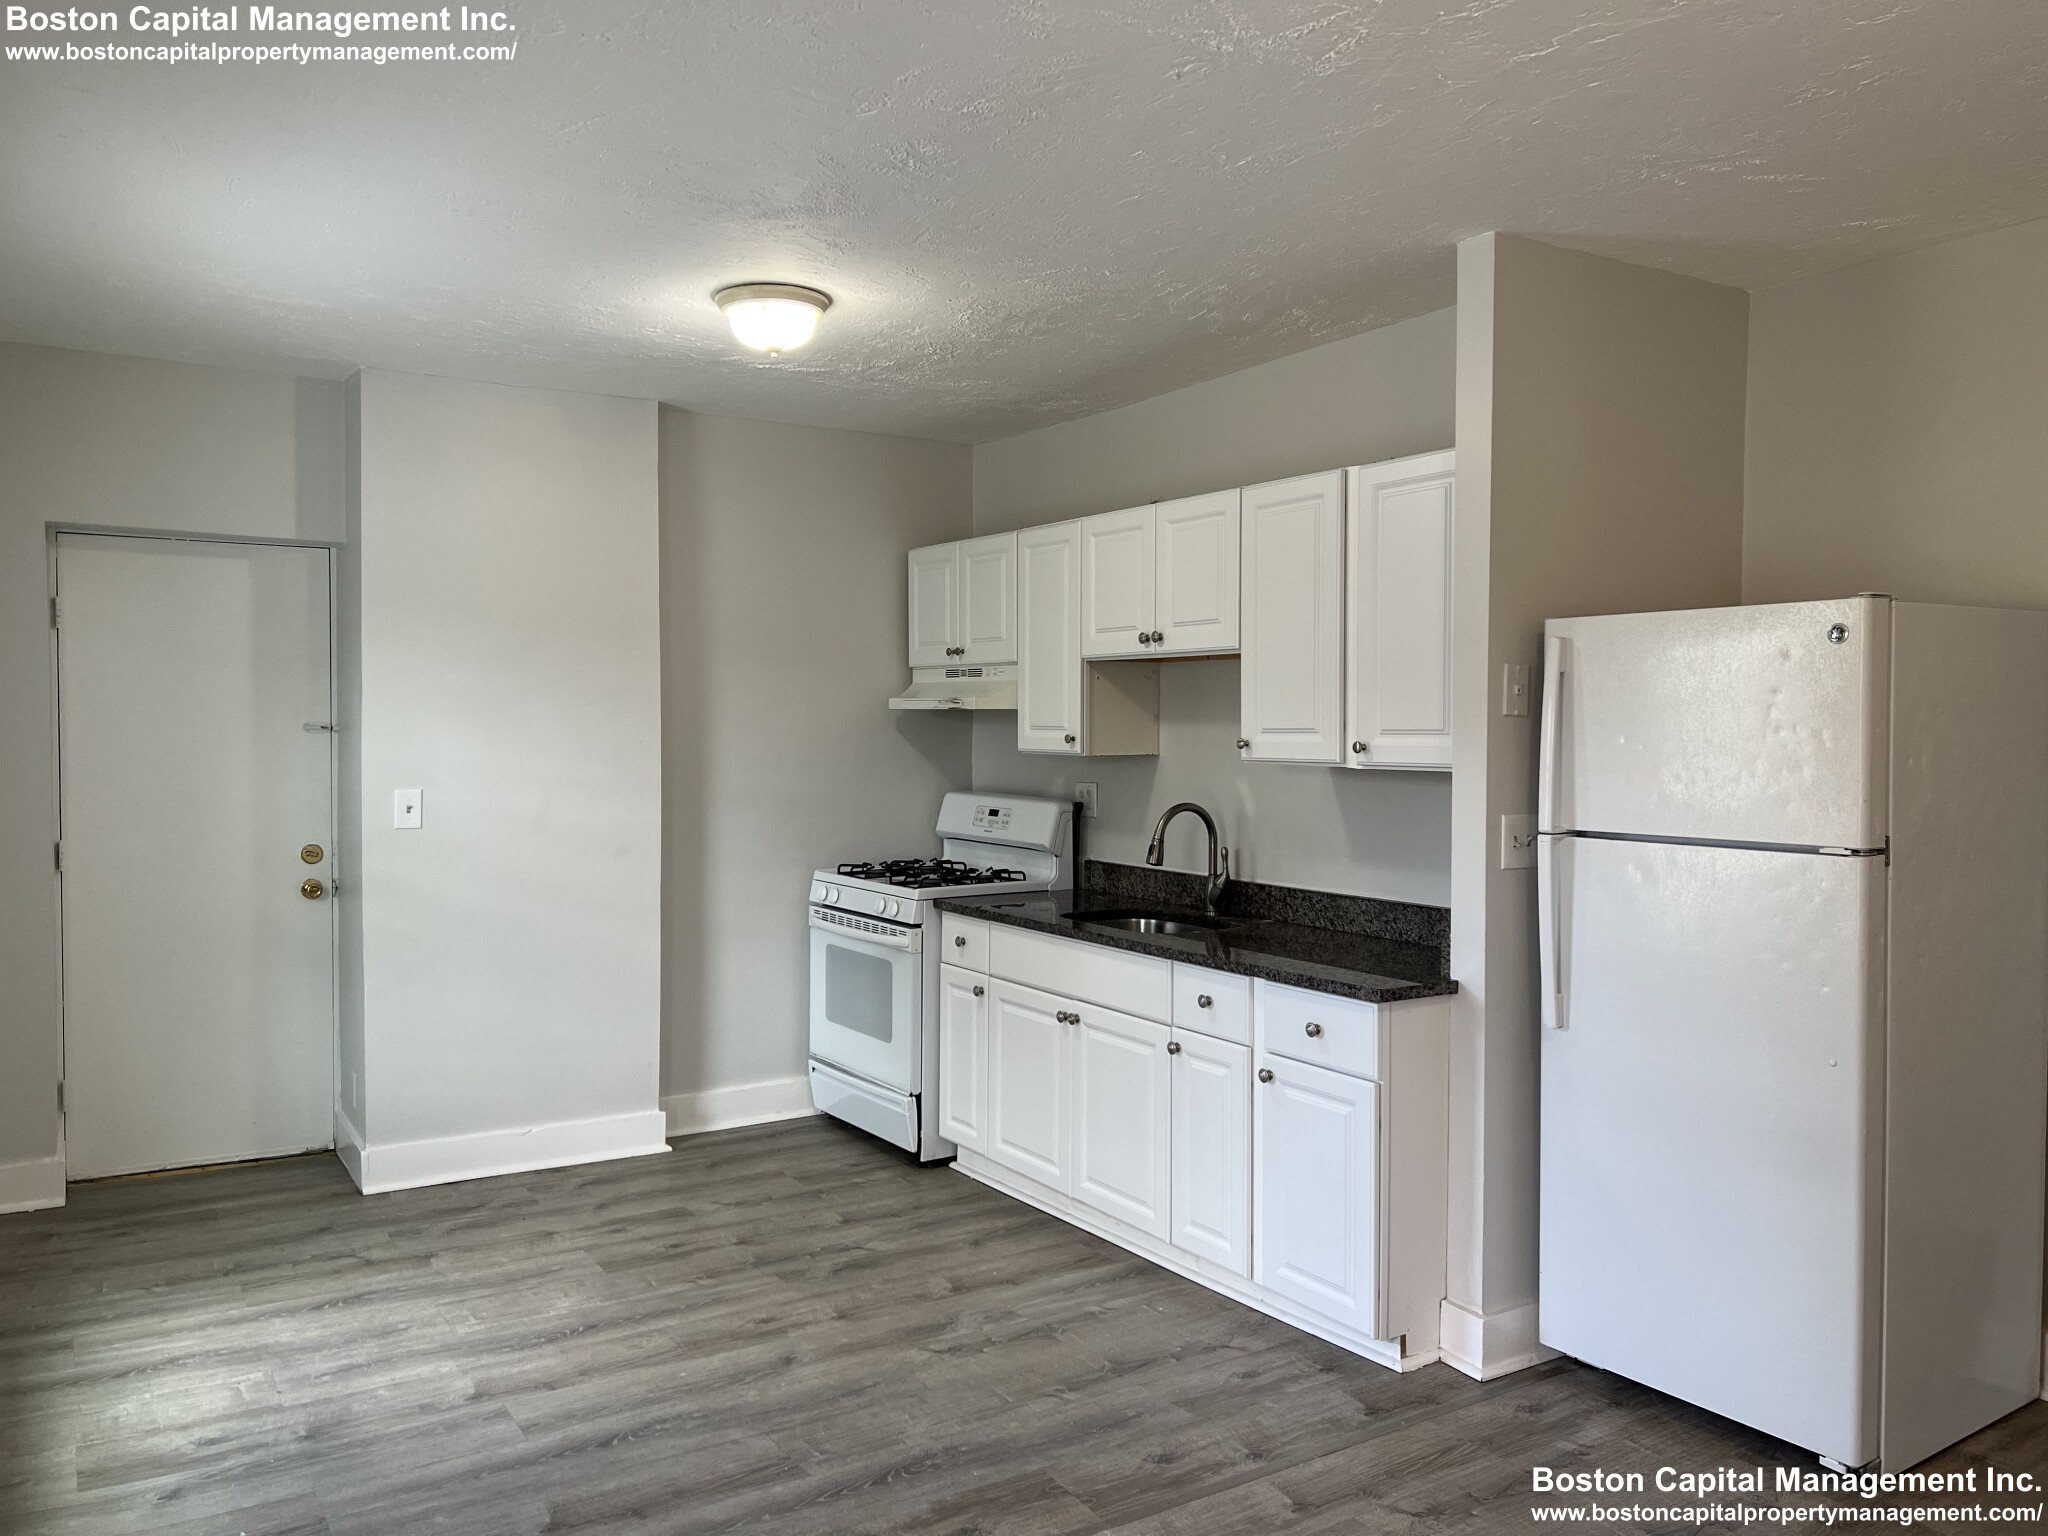 Photos of apartment on Revere Beach Pkwy.,Everett MA 02149